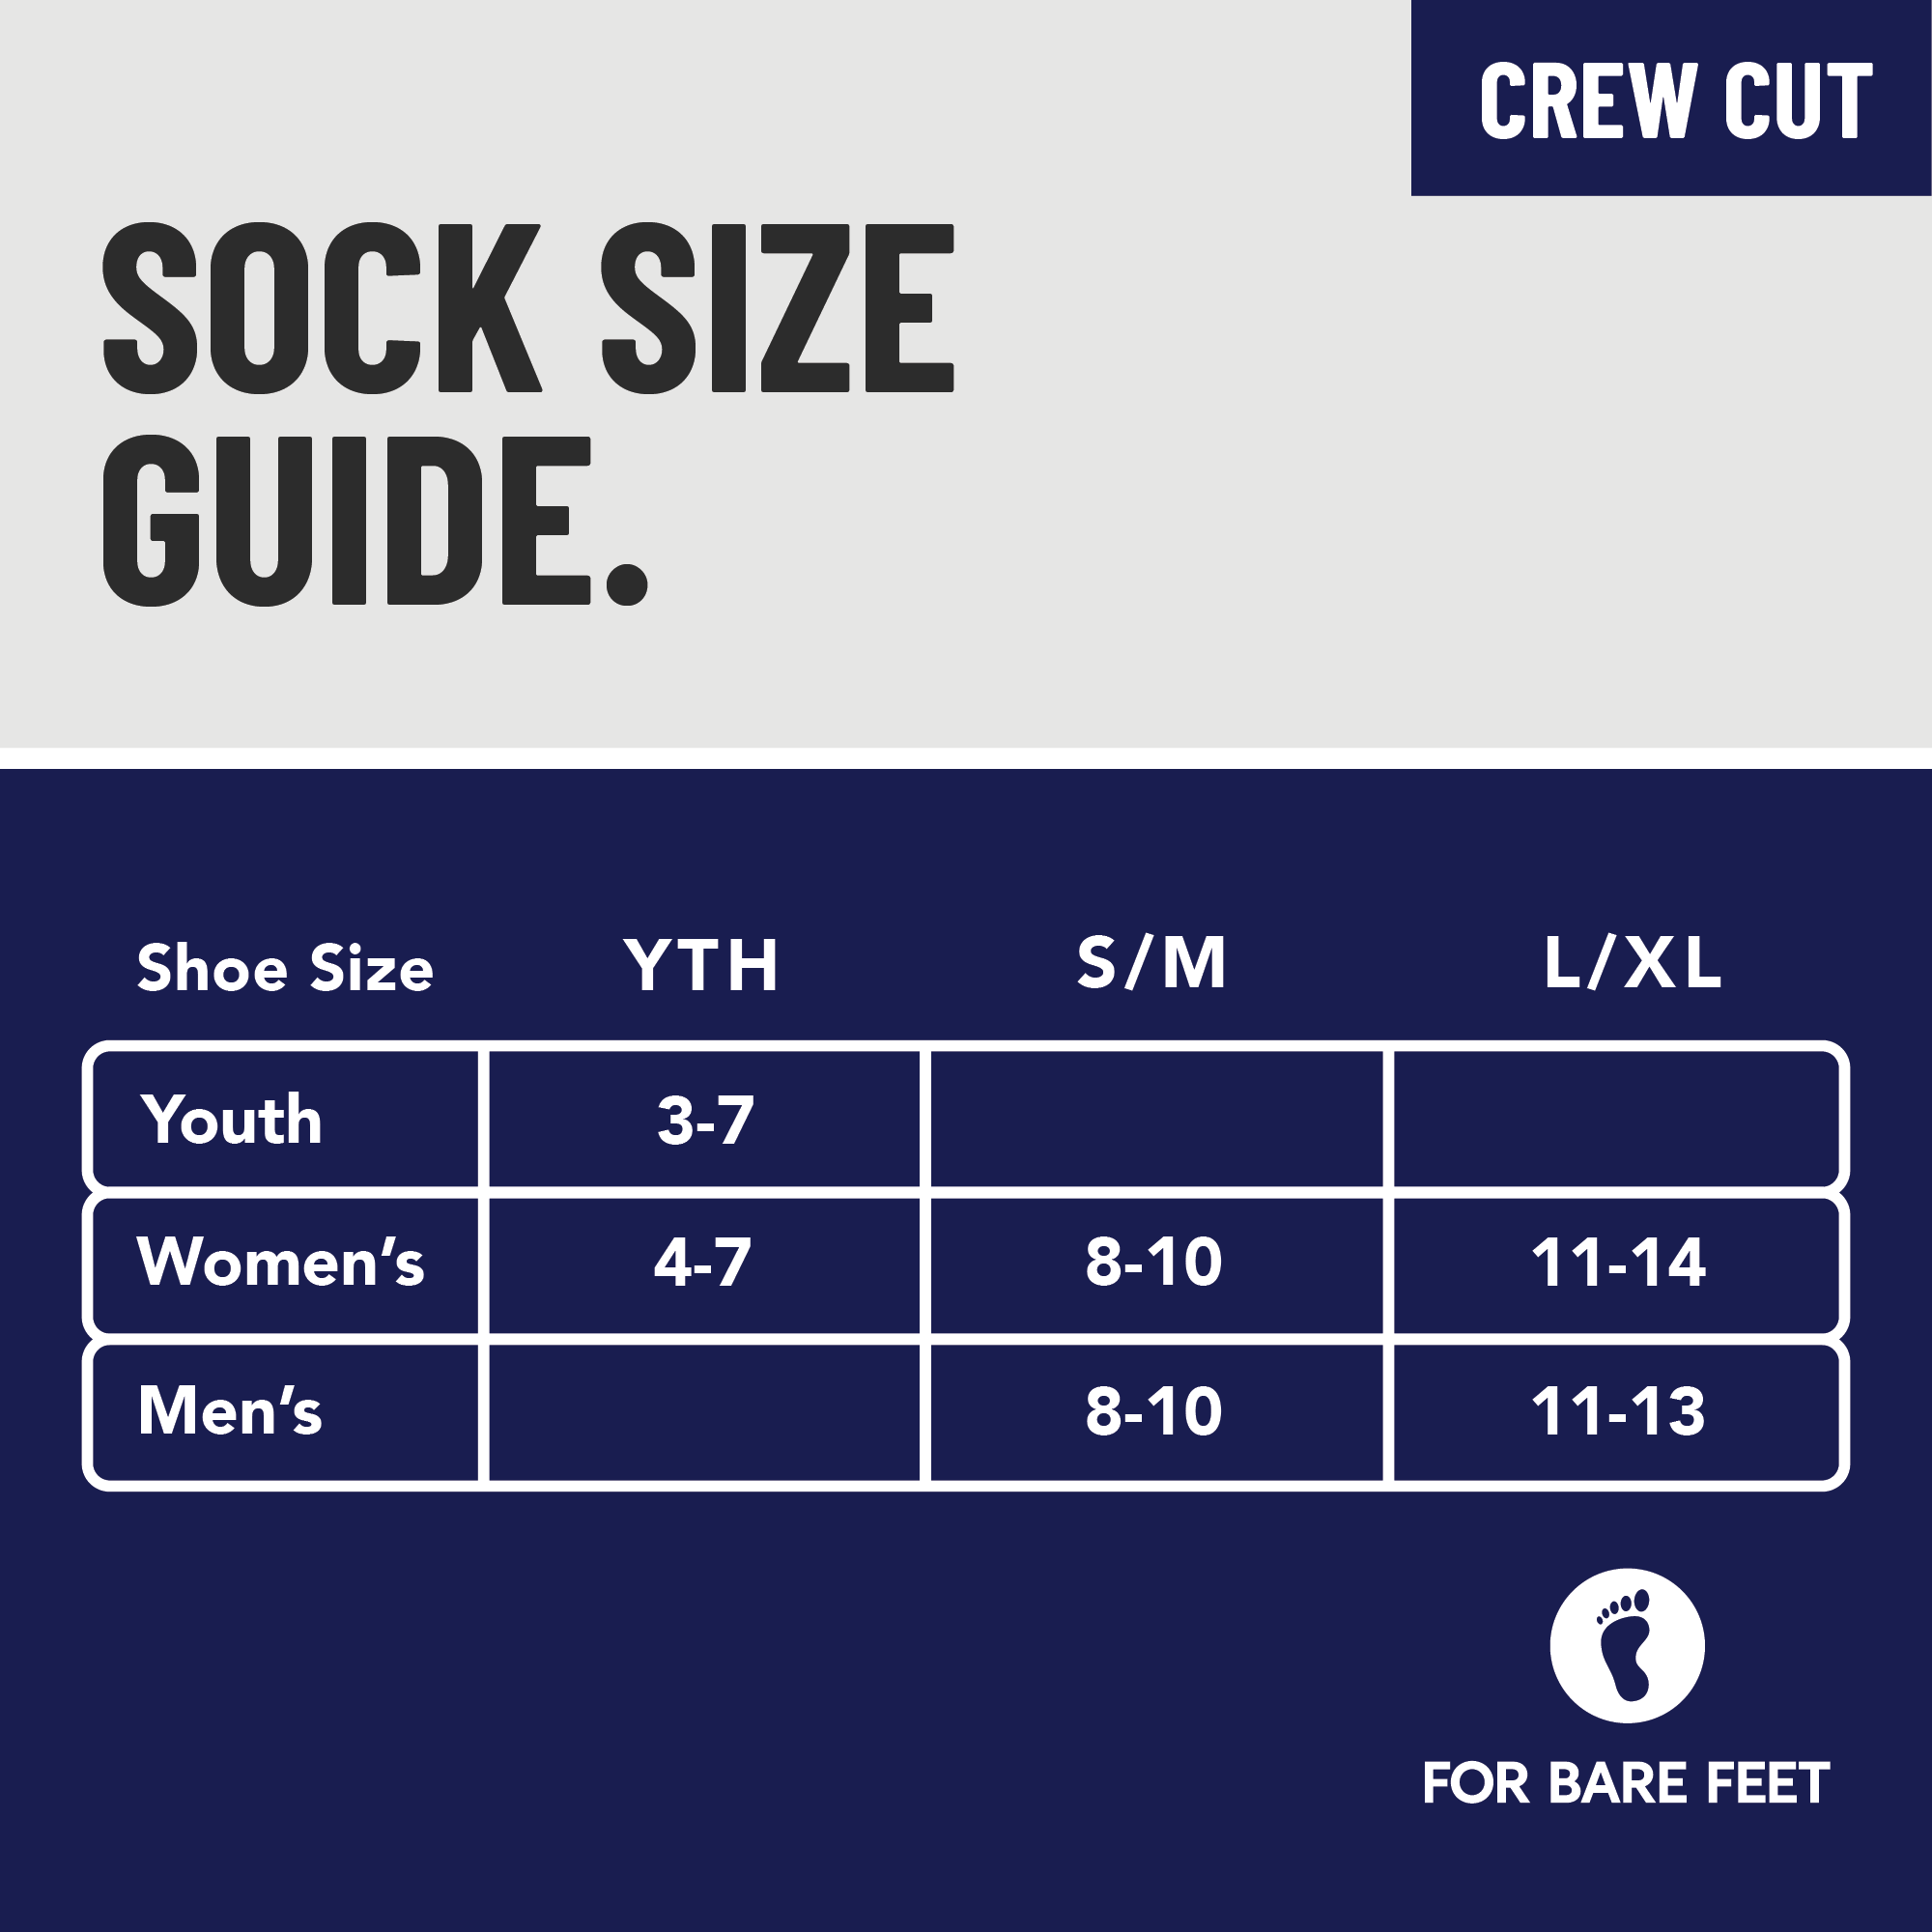 Indiana Hoosiers Legend Premium Crew Socks